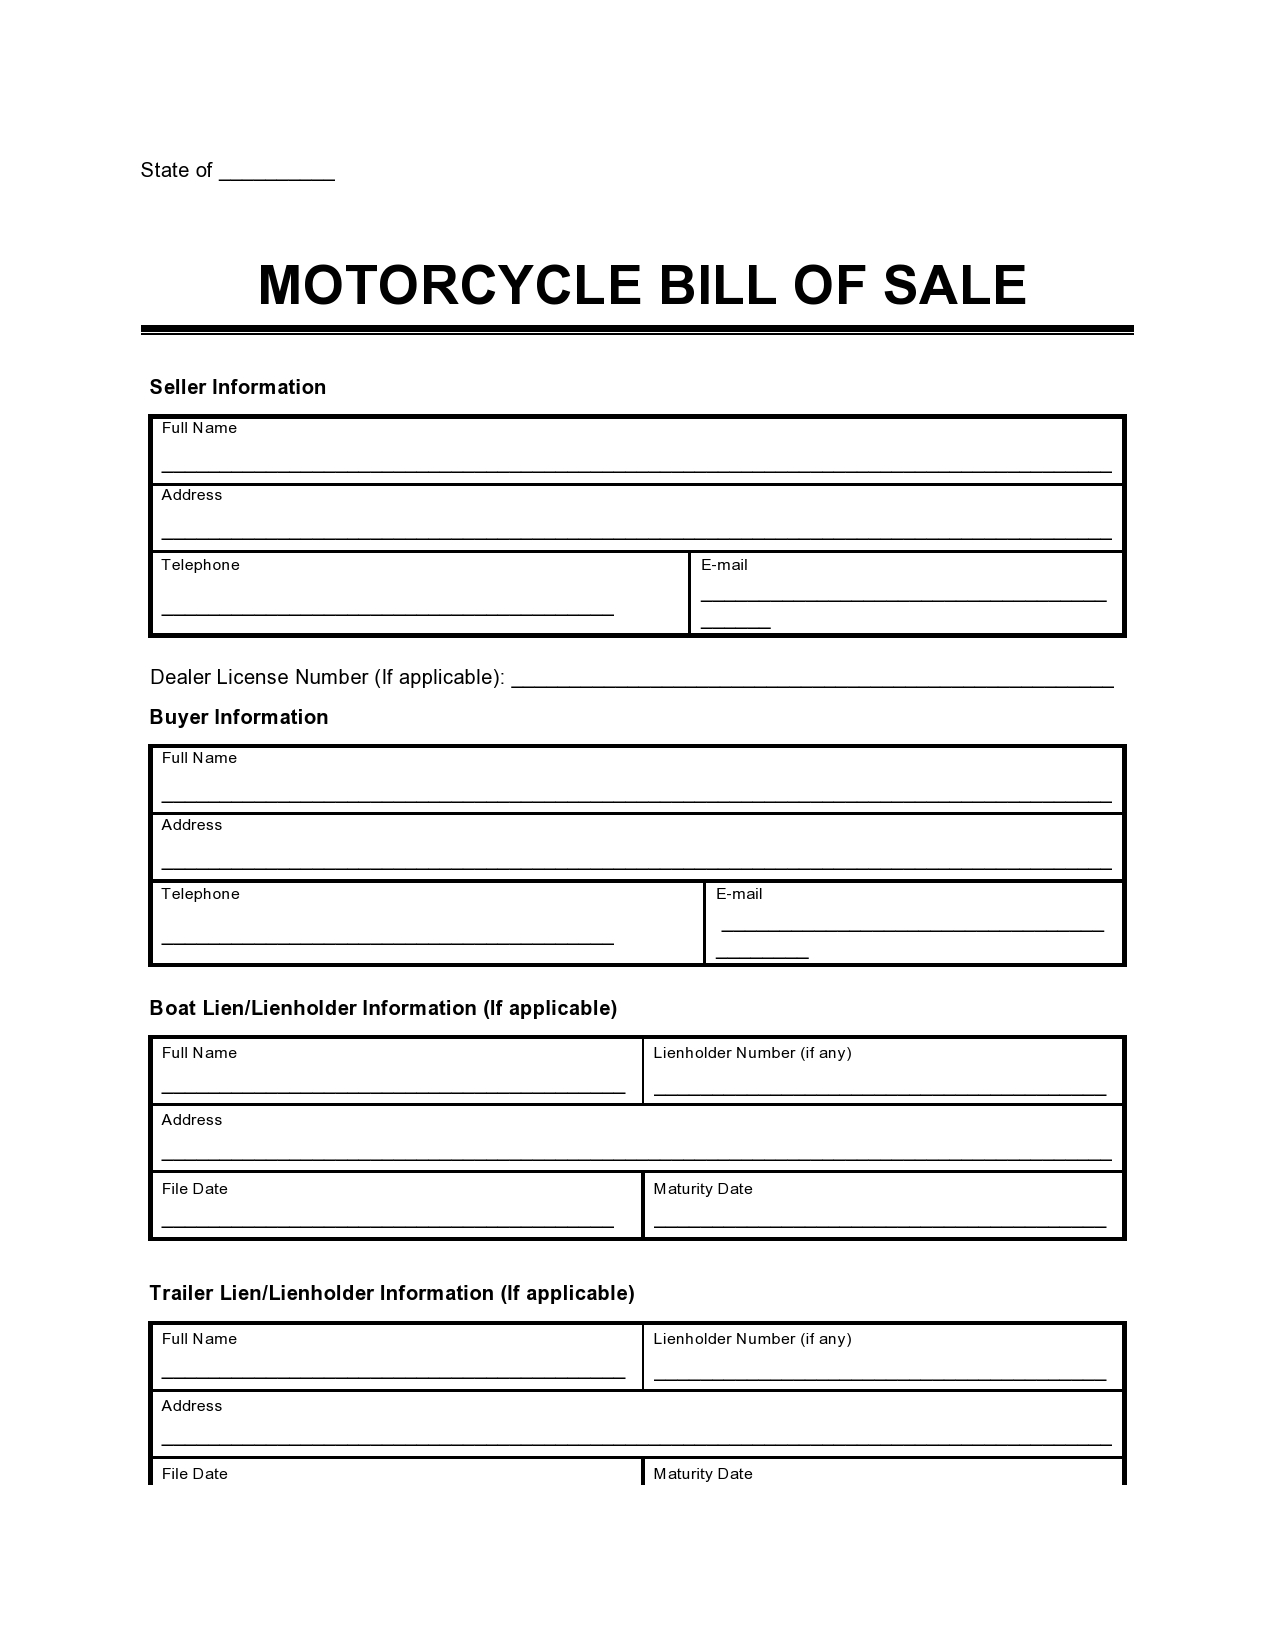 Free motorcycle bill of sale 33